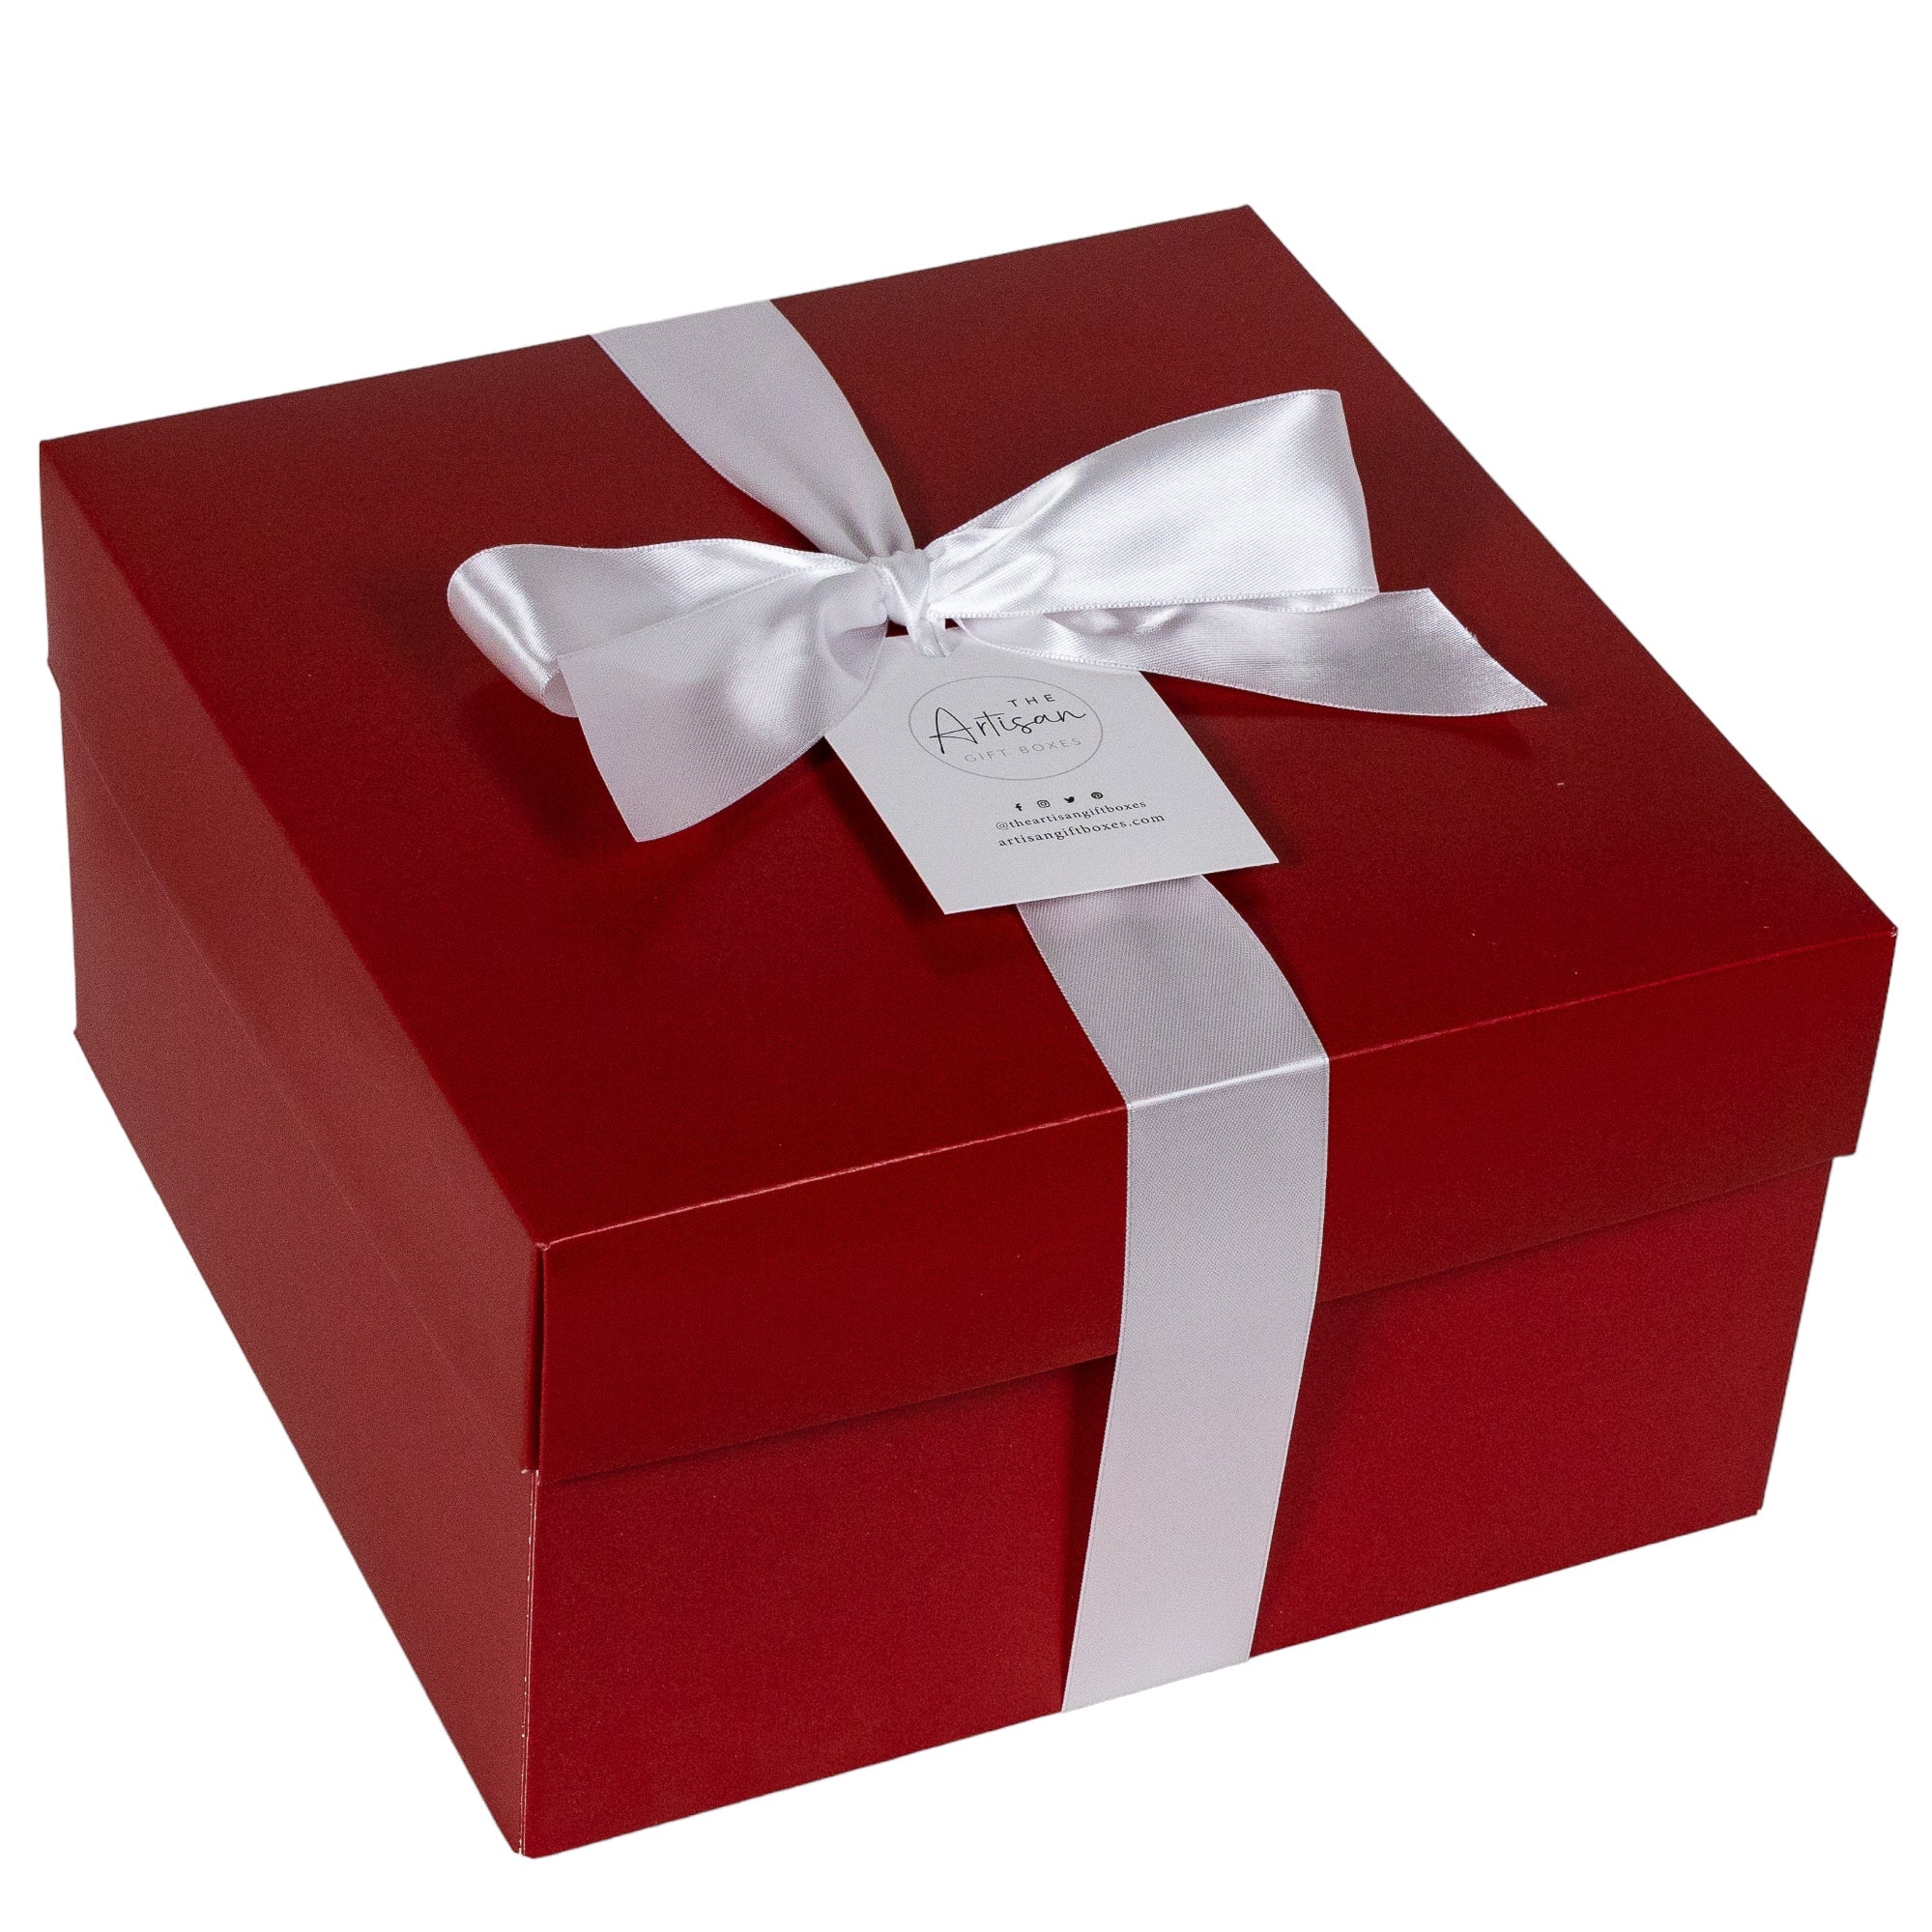 Stay Cozy Gift Box